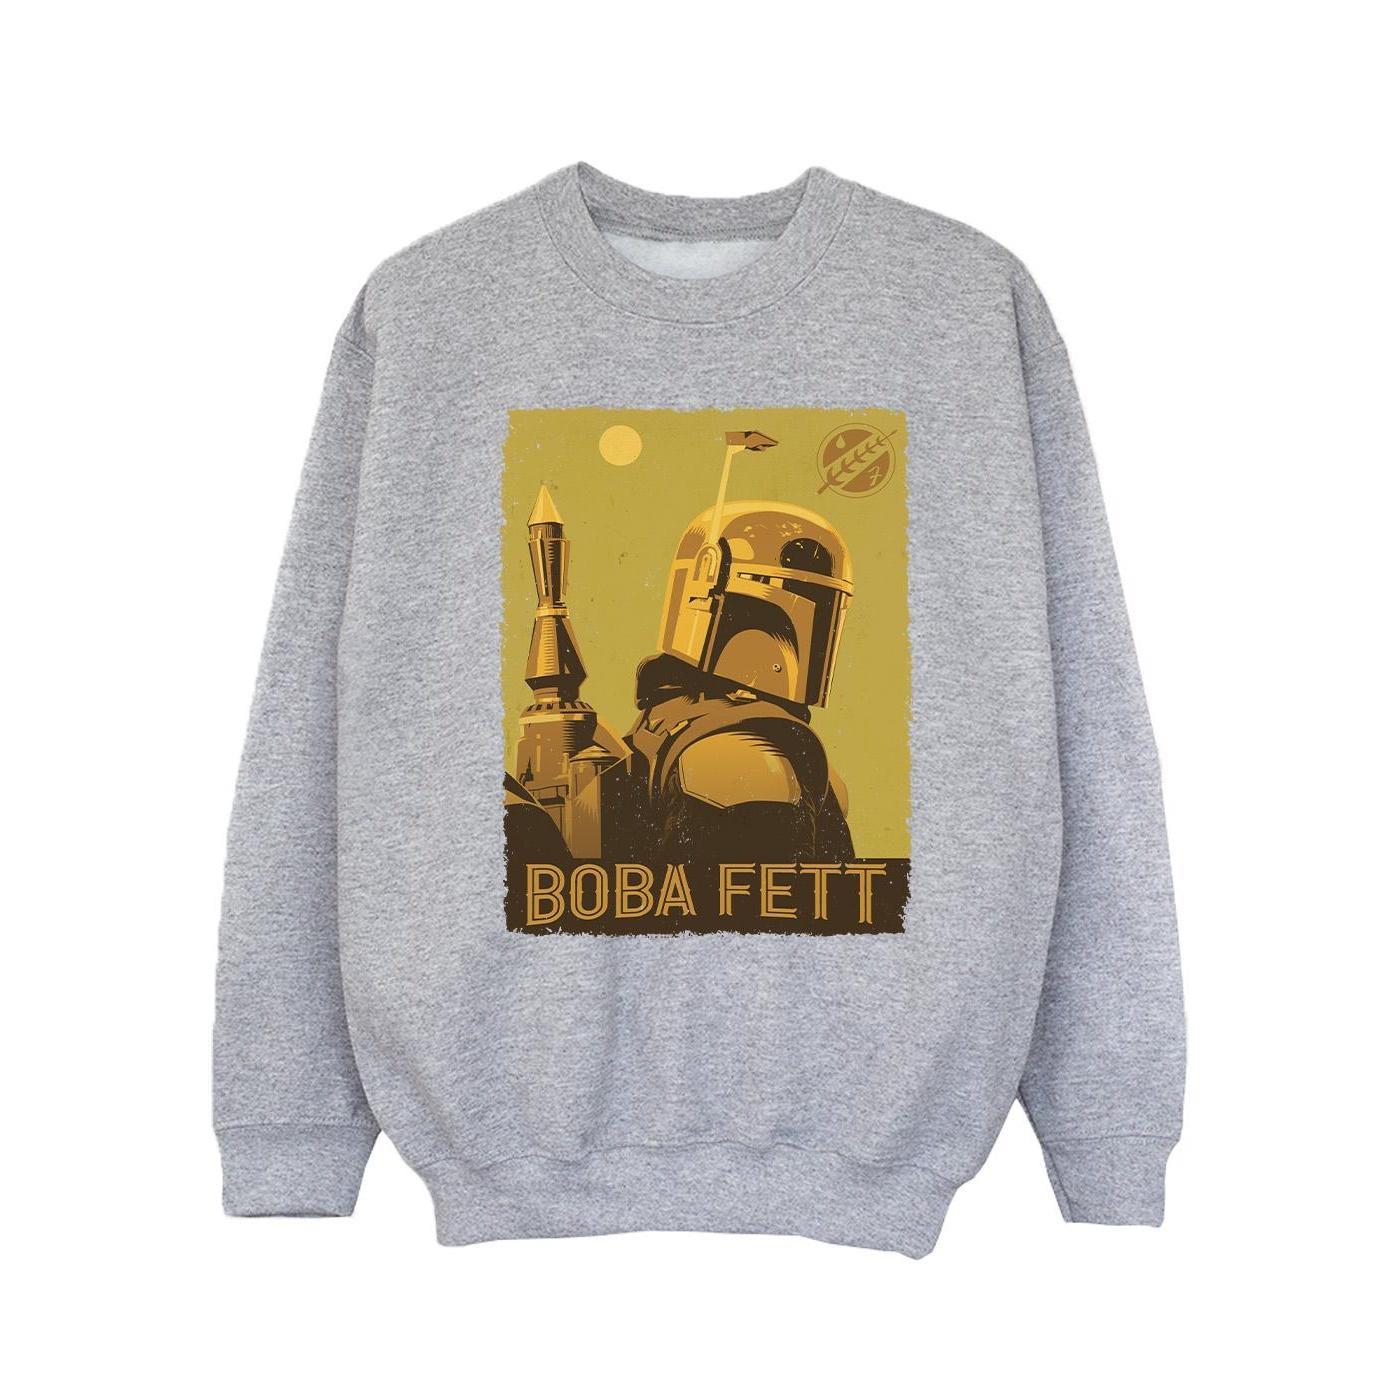 Star Wars Girls The Book Of Boba Fett Planetary Stare Sweatshirt (Sports Grey) (12-13 Years)